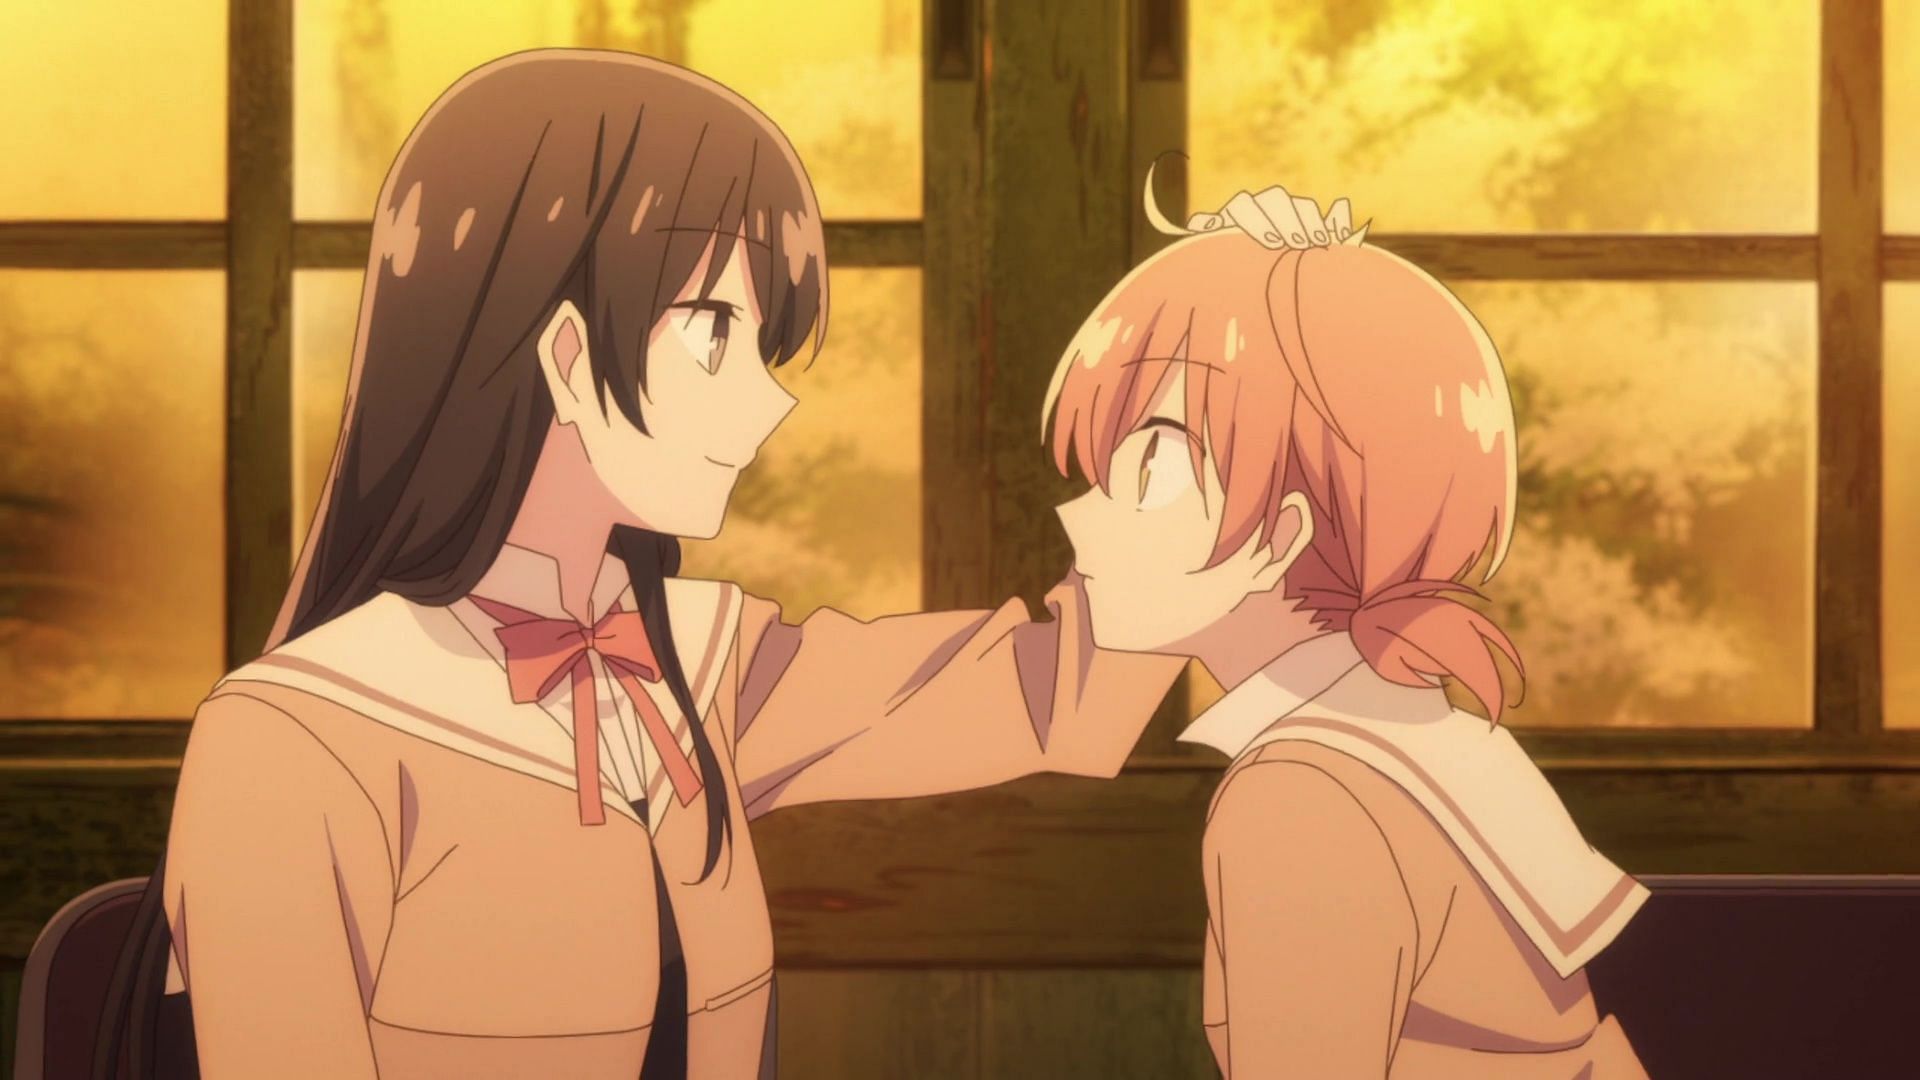 Yuu Koita and Touko Nanami as seen in the anime Bloom Into You (Image via Studio Troyca)